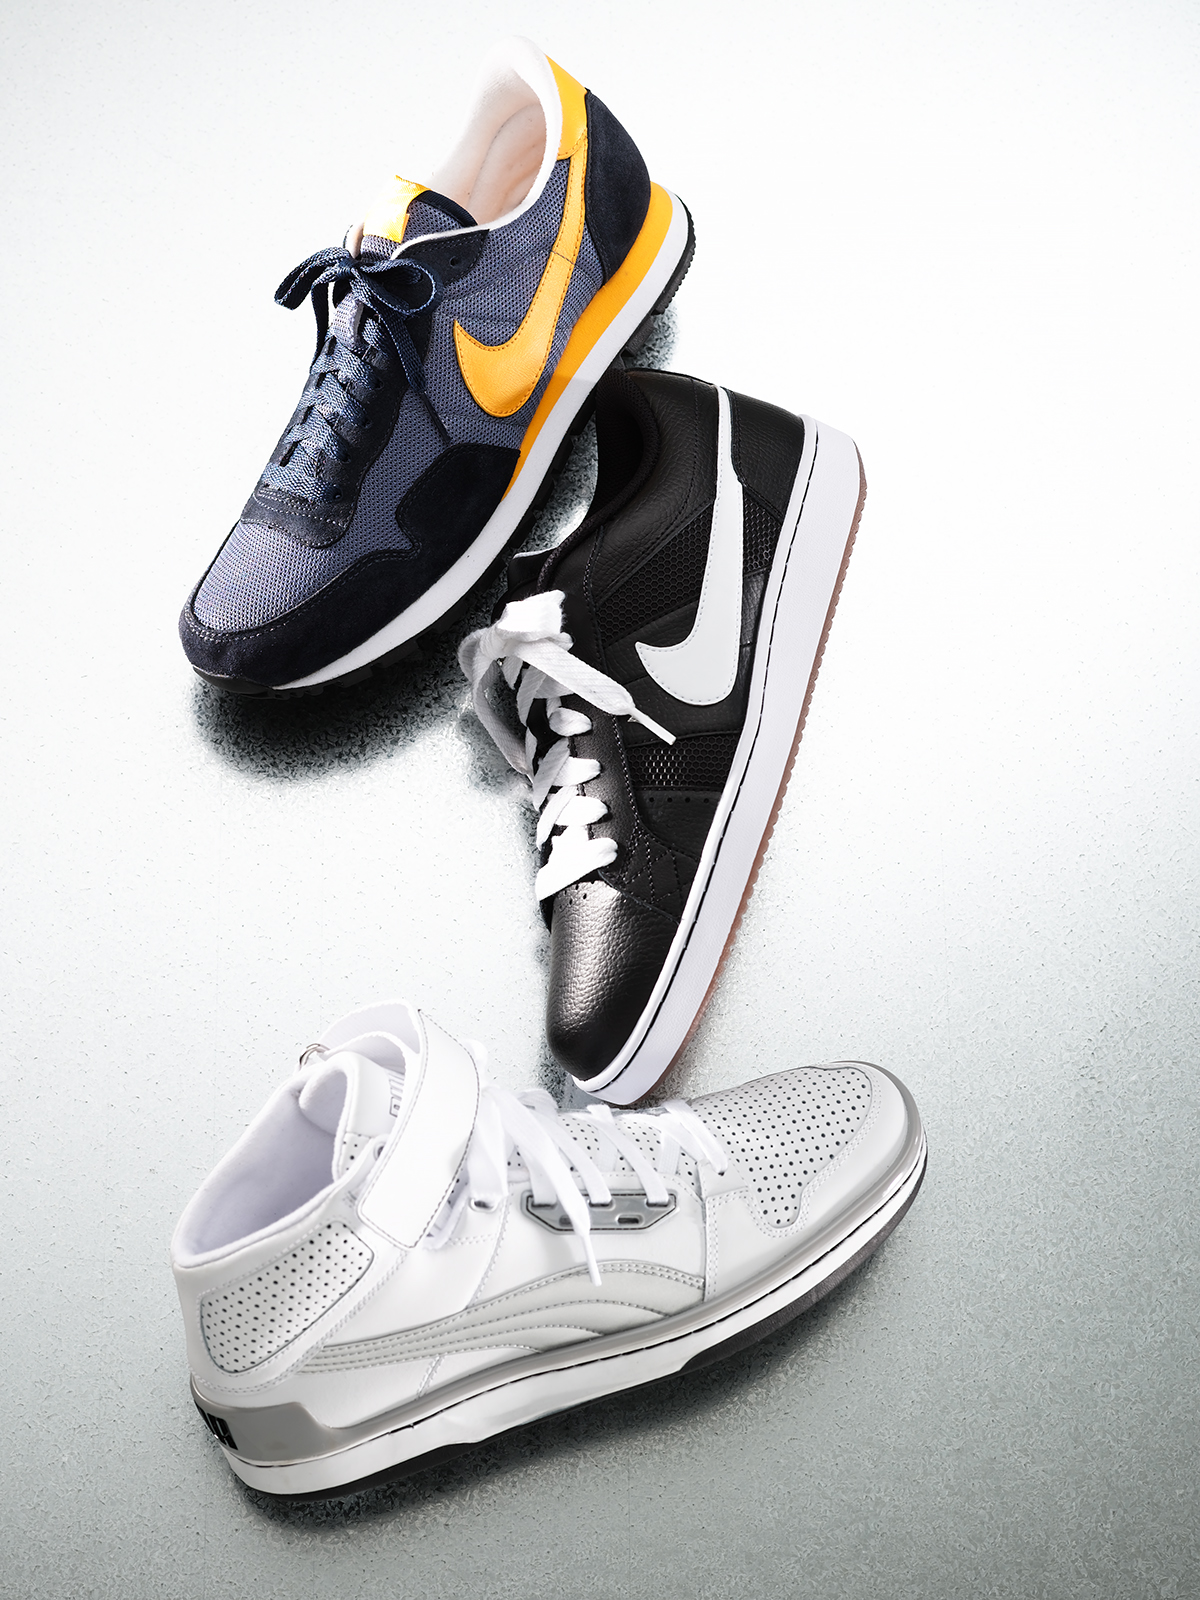 Sneaker_Website.jpg